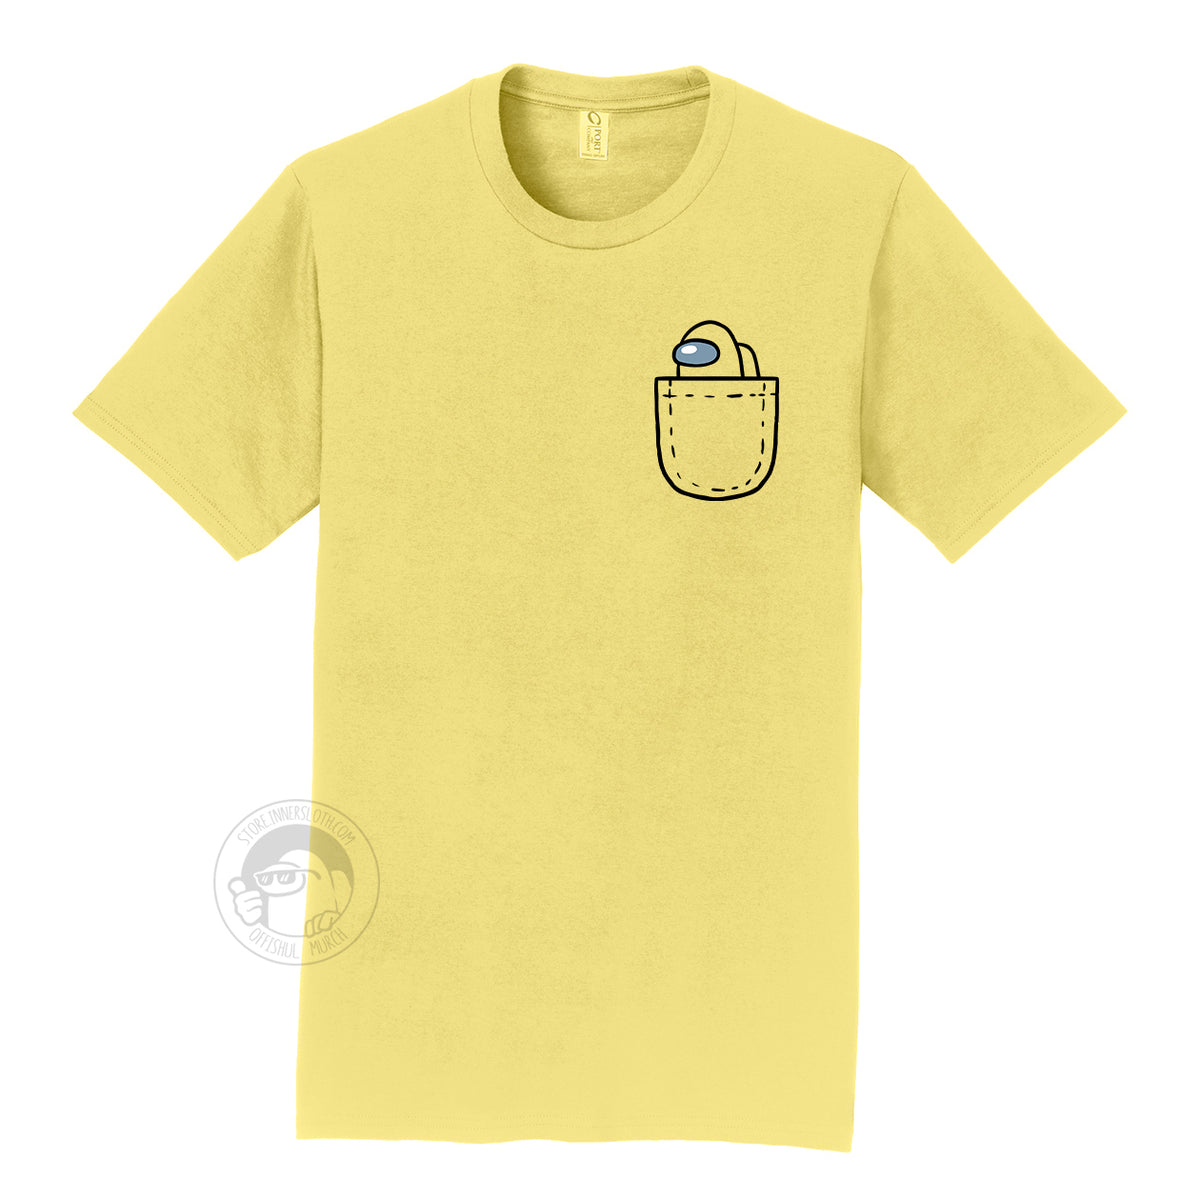 Among Us: Mini Crewmate Pocket Tee (Warm Colors)